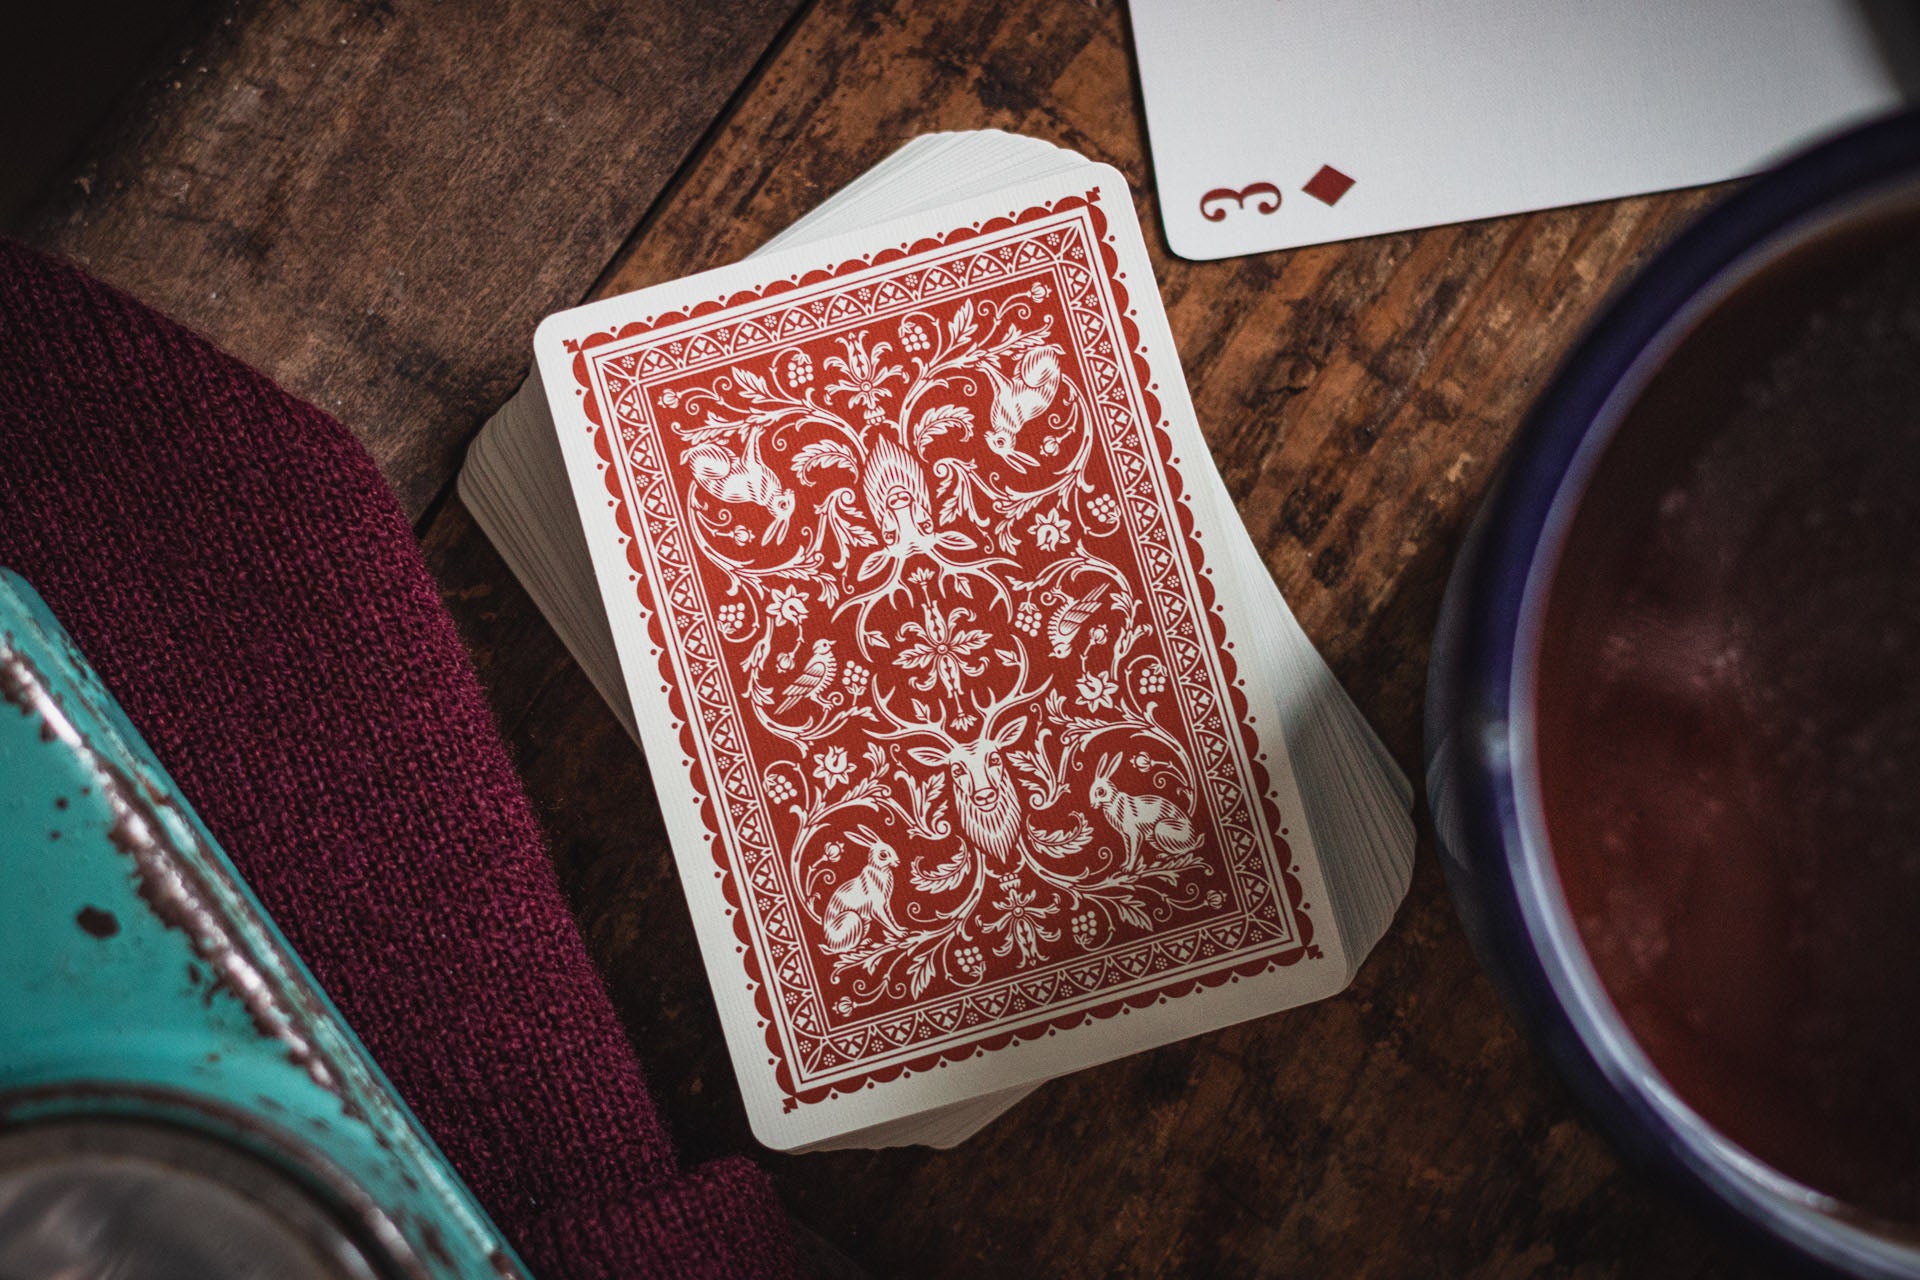 Kodiak Playing Cards